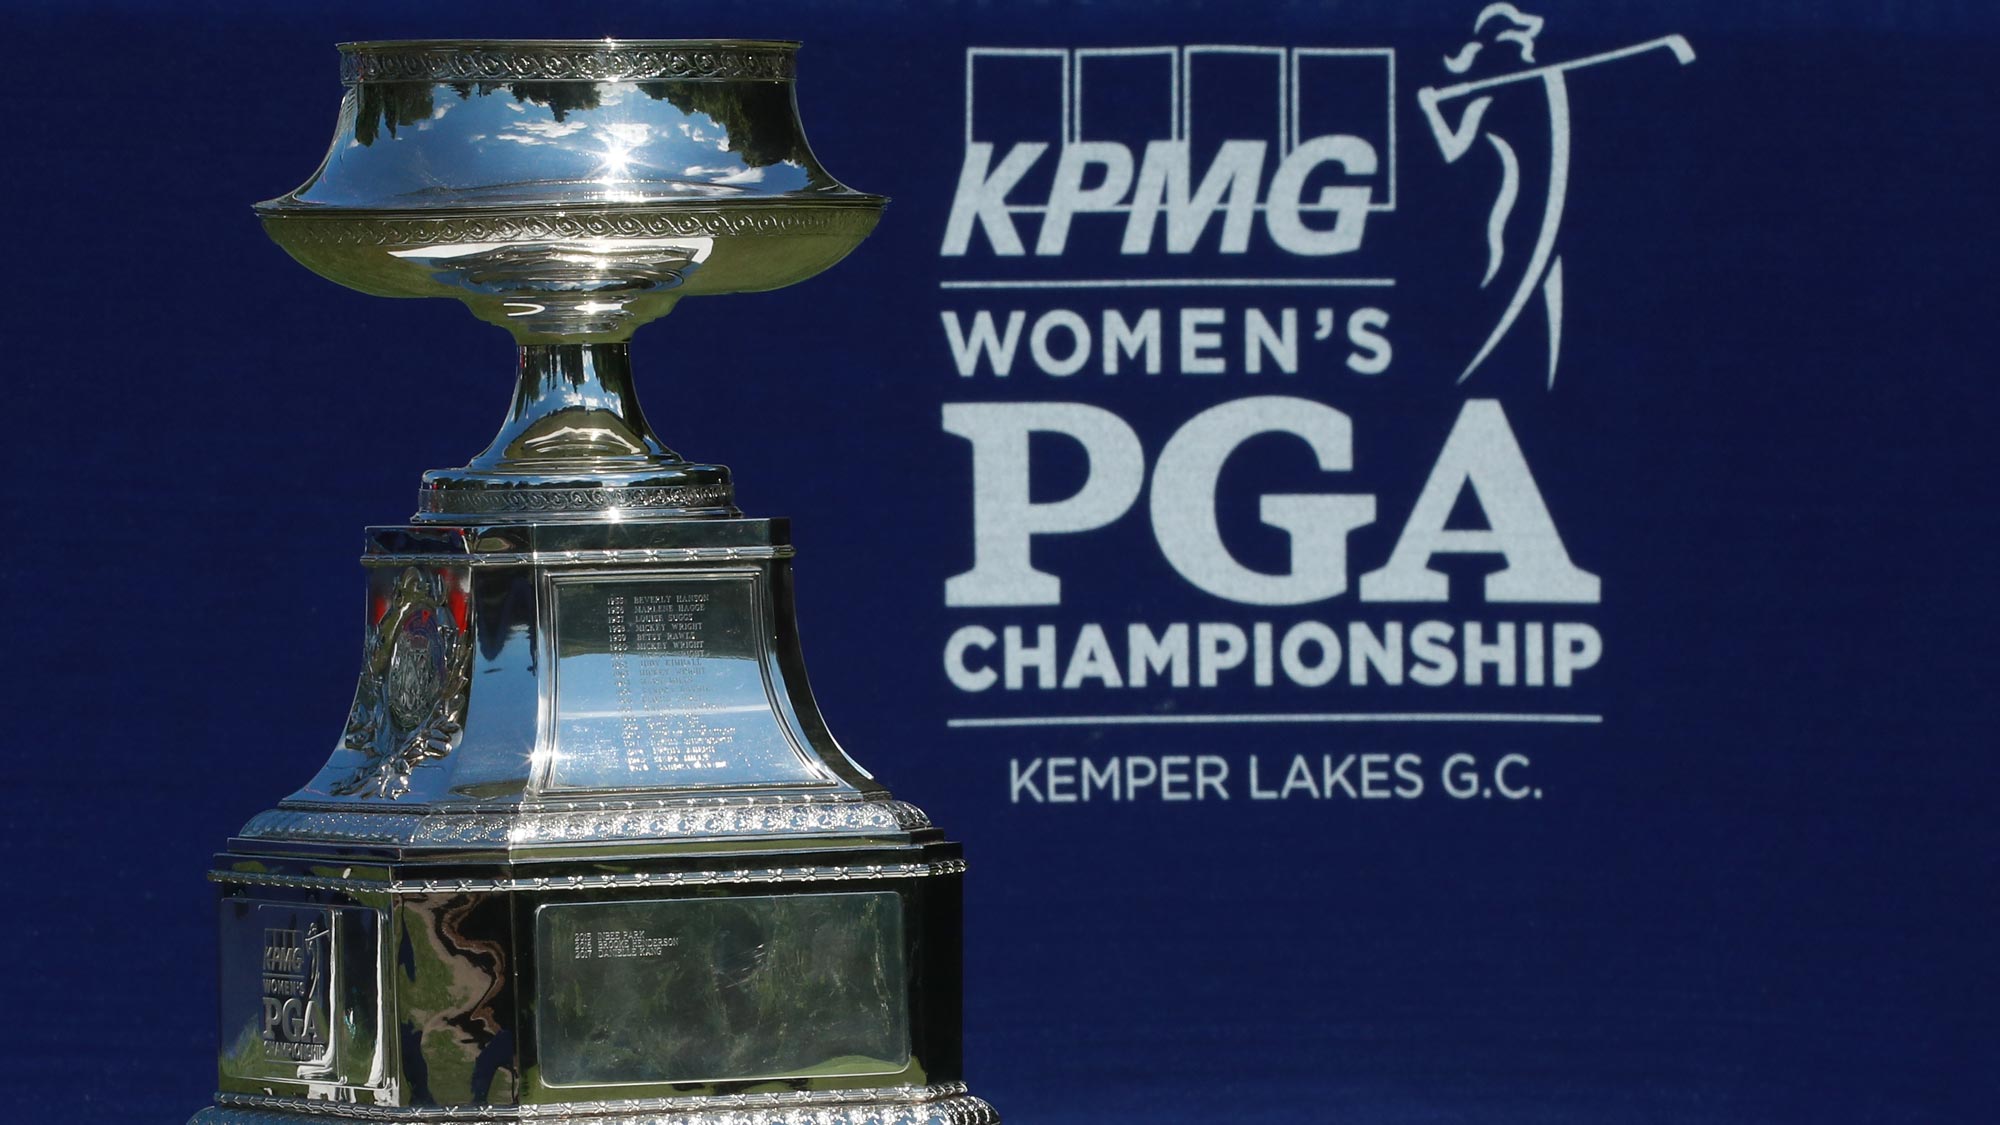 2018 KPMG Women's PGA Championship Trophy